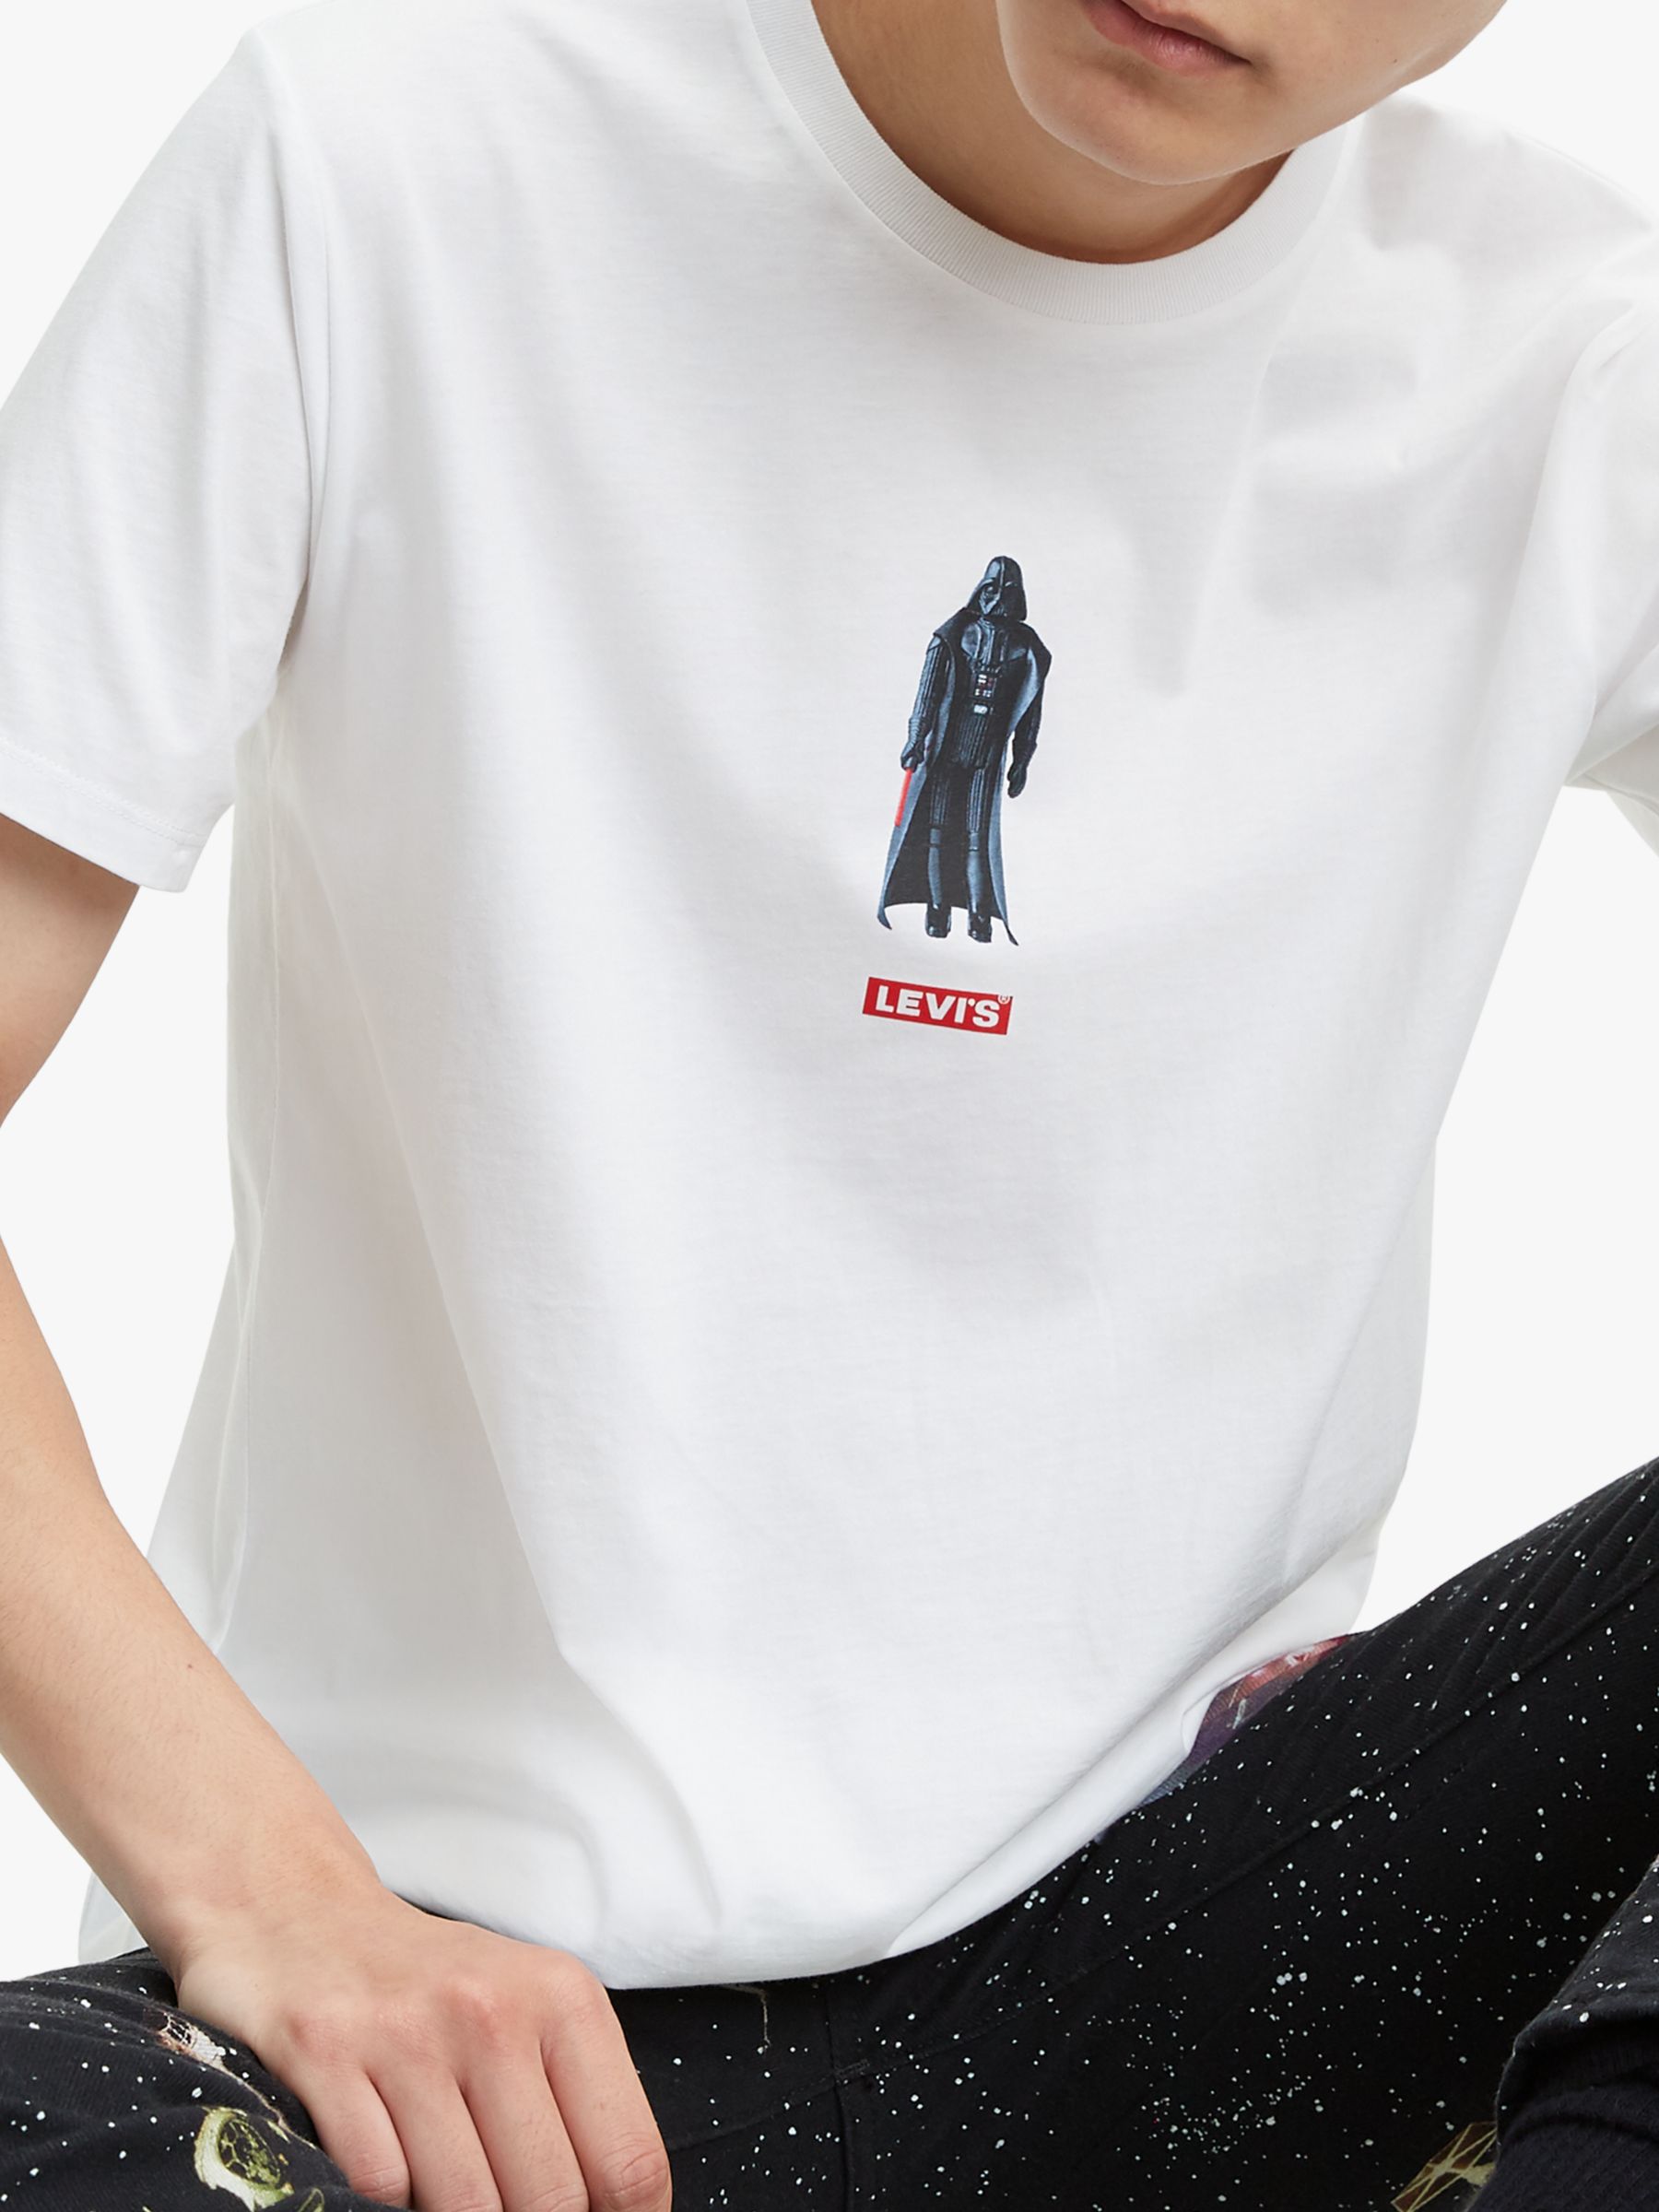 Levi's x Star Wars Darth Vader Graphic T-Shirt, White